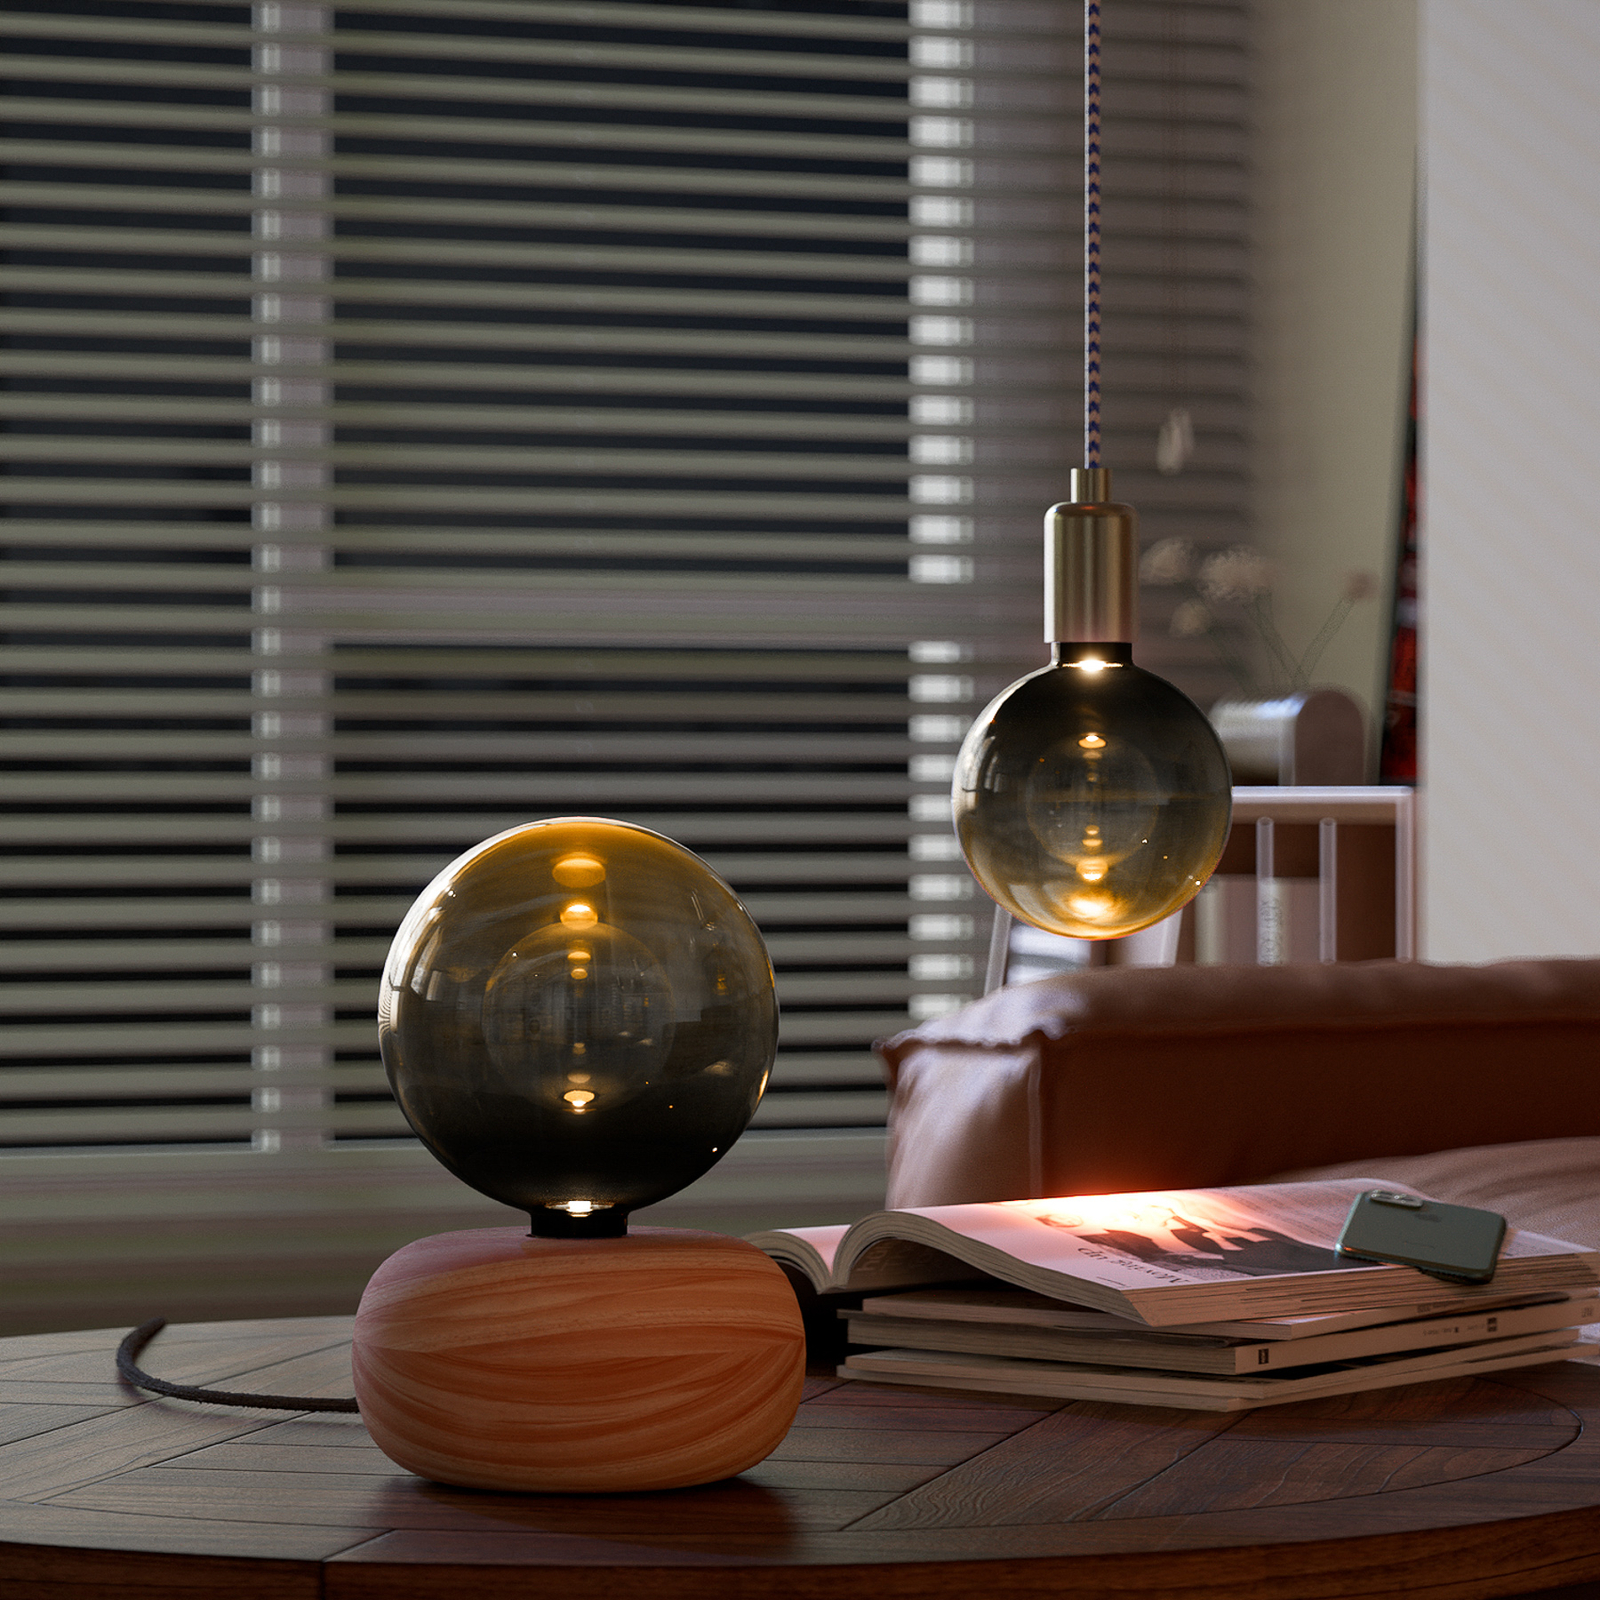 Calex Round Wood bordslampa av trä